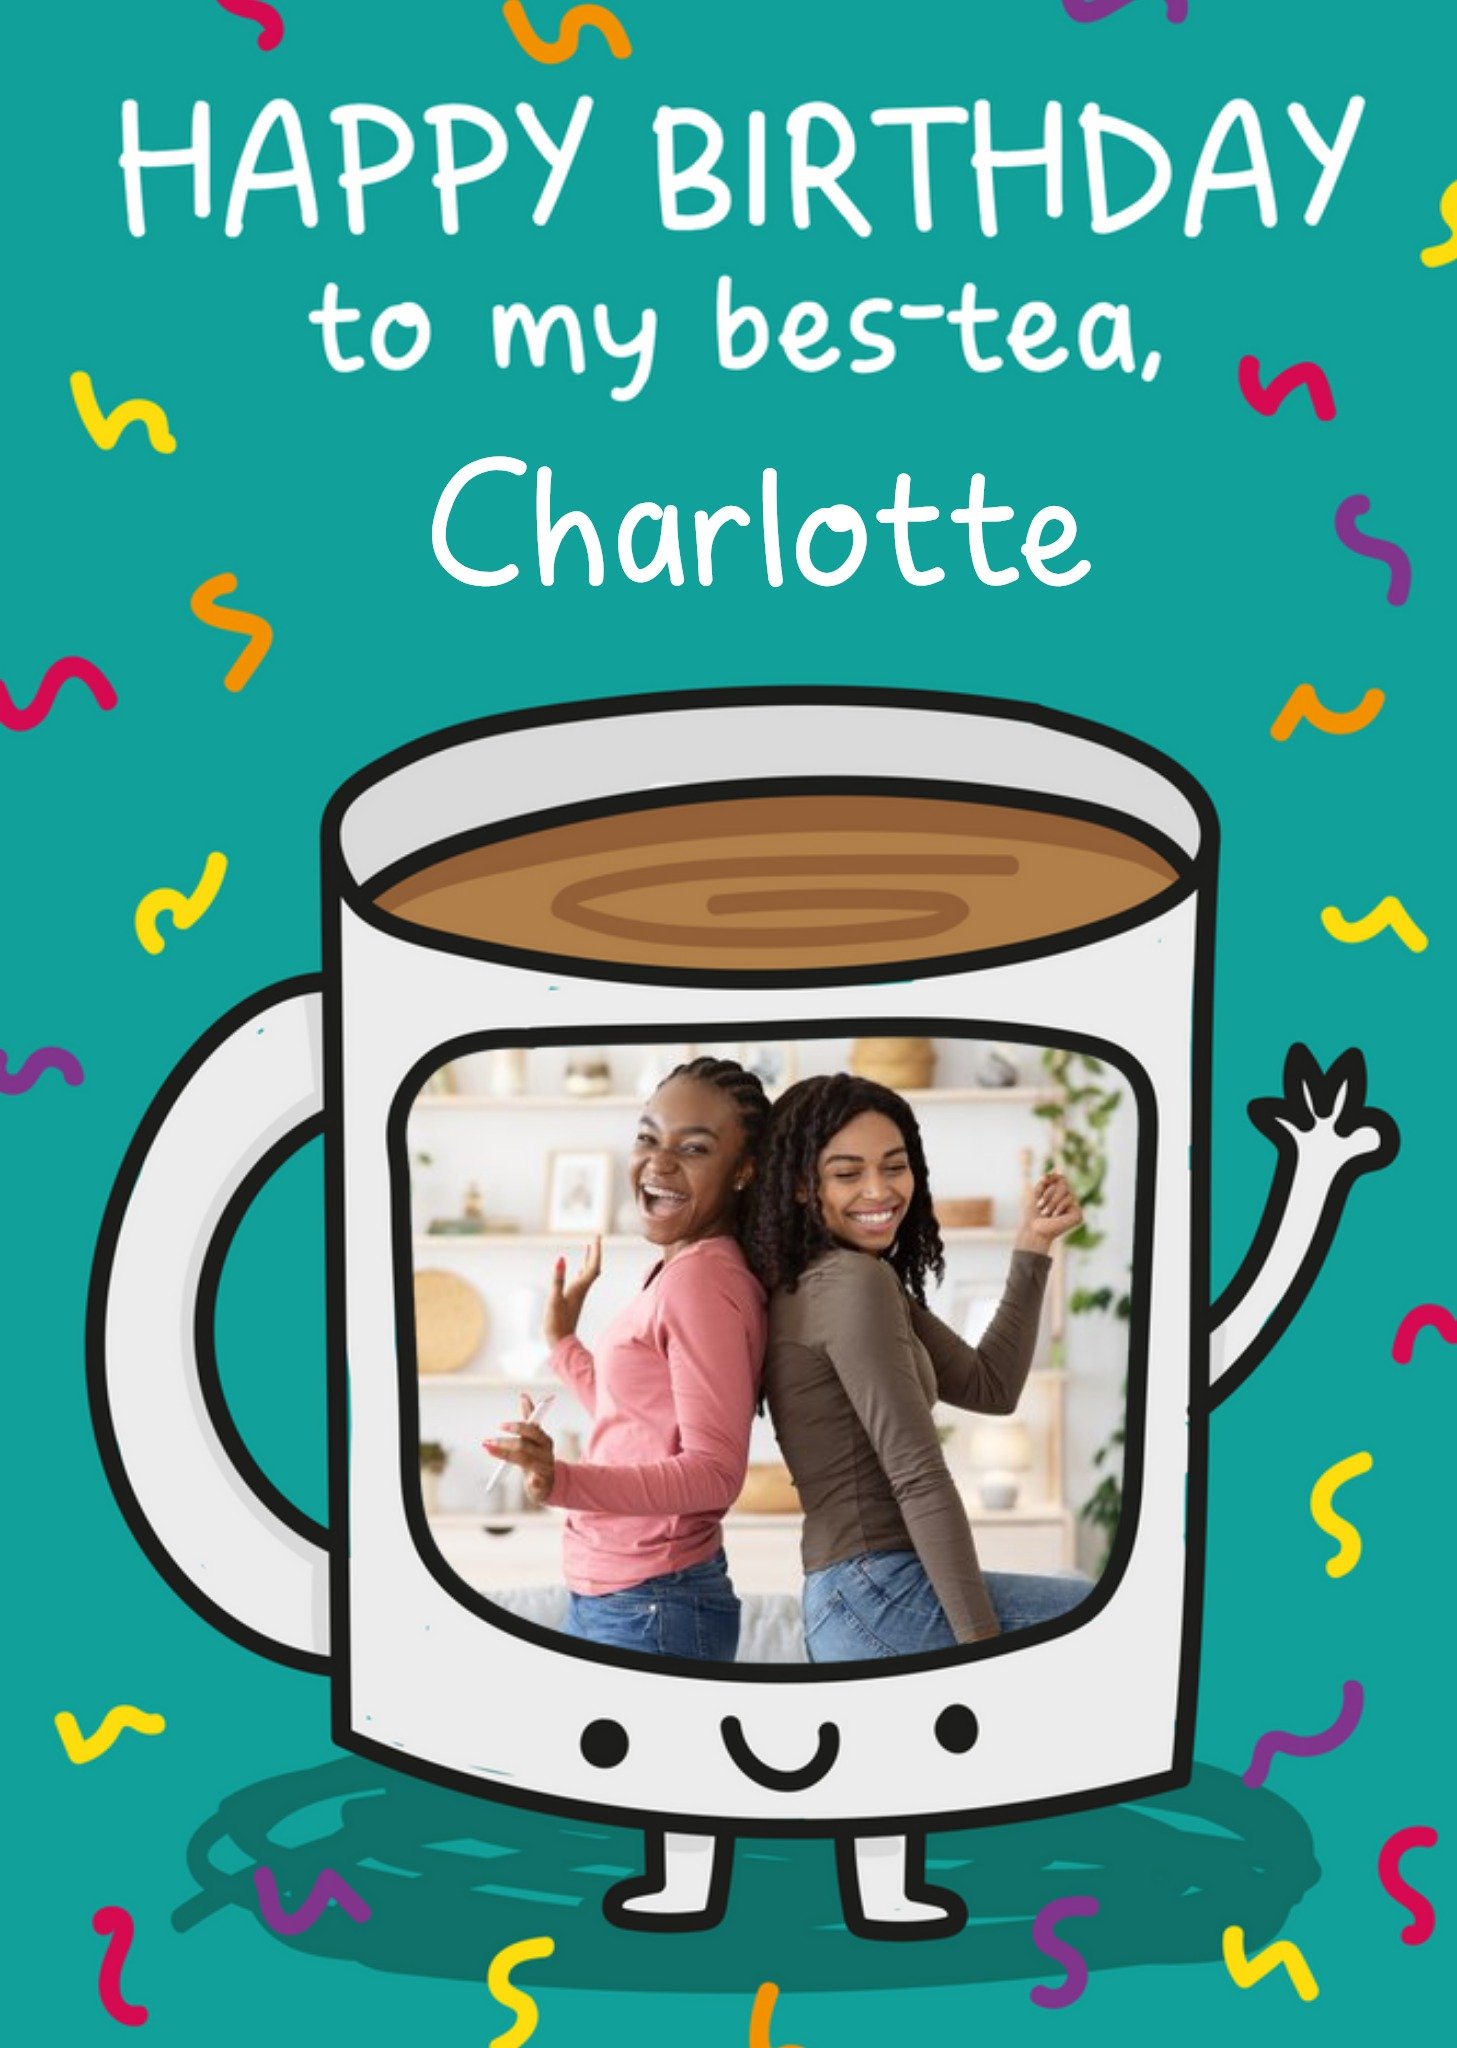 Moonpig Cute Illustrated Bes-Tea Photo Upload Birthday Card Ecard